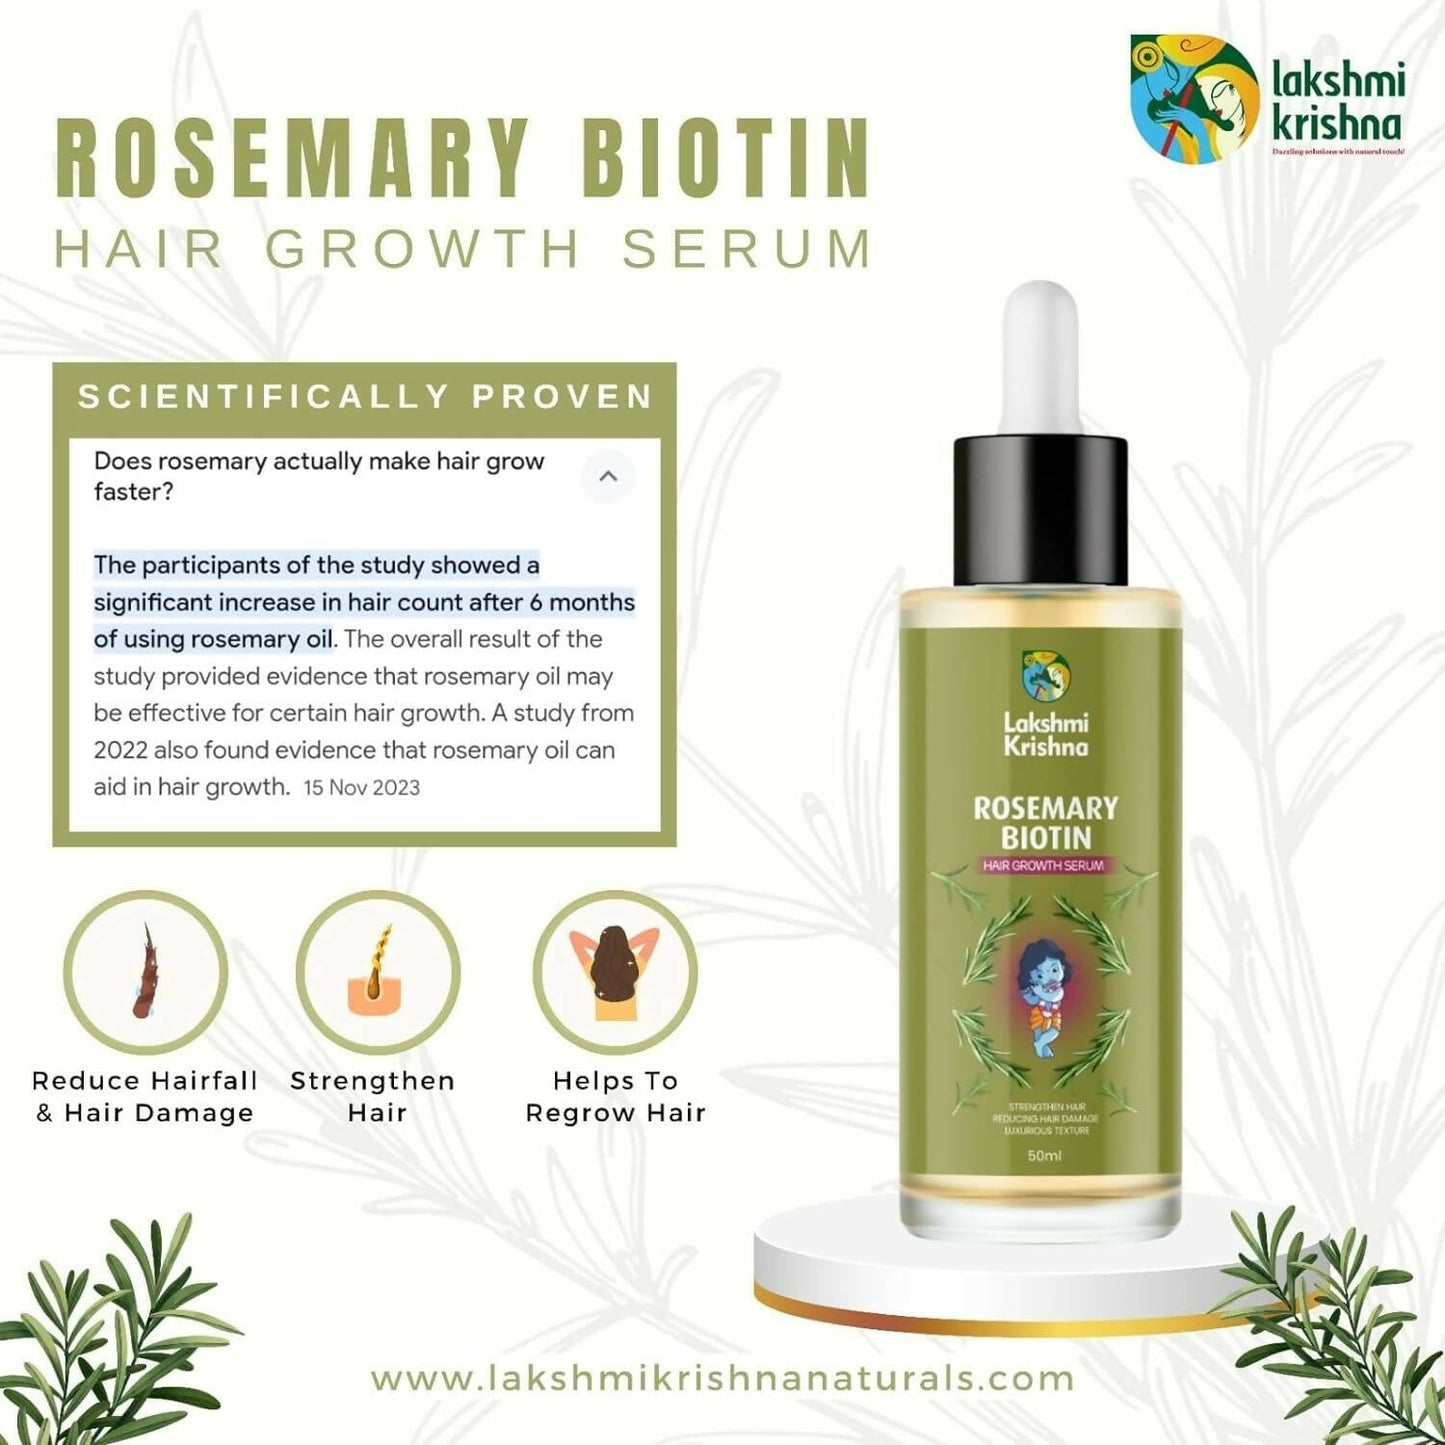 Lakshmi Krishna Naturals Rosemary Biotin Hair Growth Serum